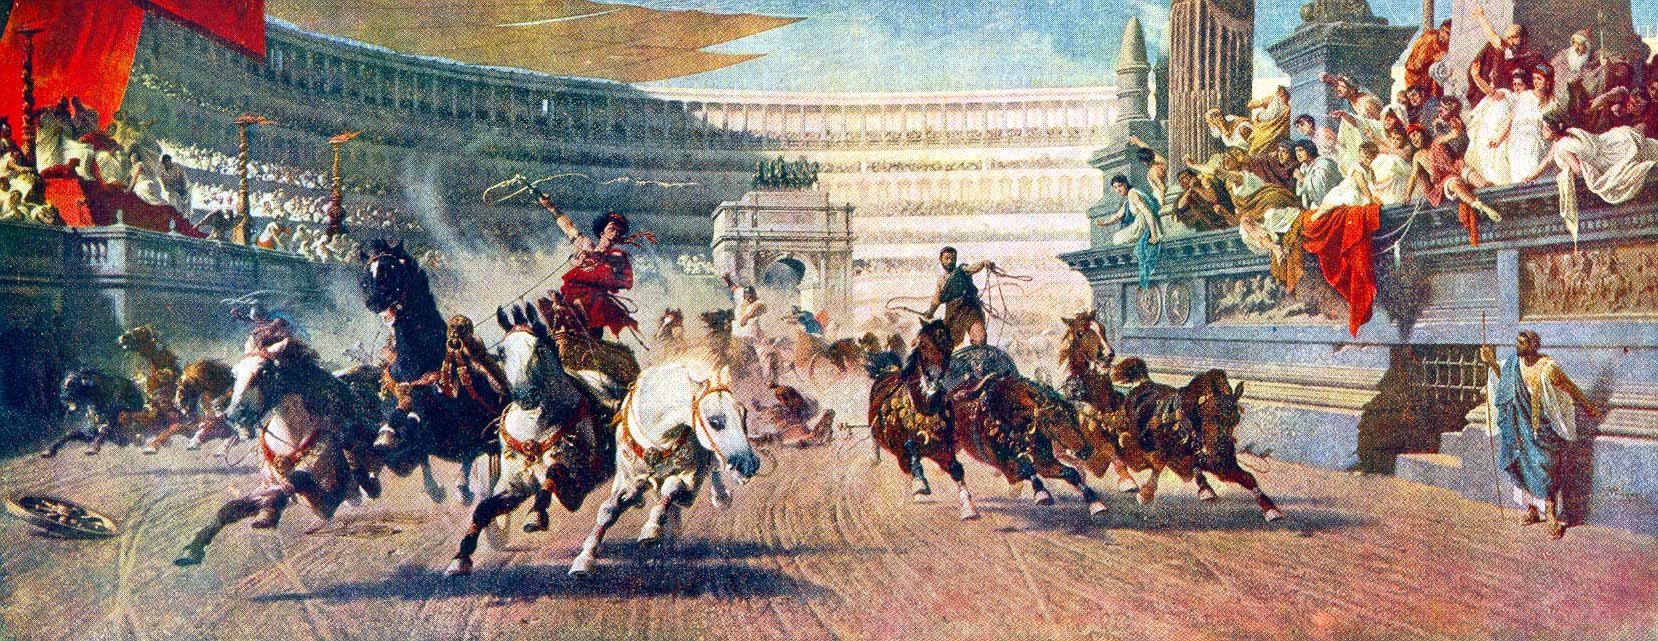 hippodrome constantinople chariot races